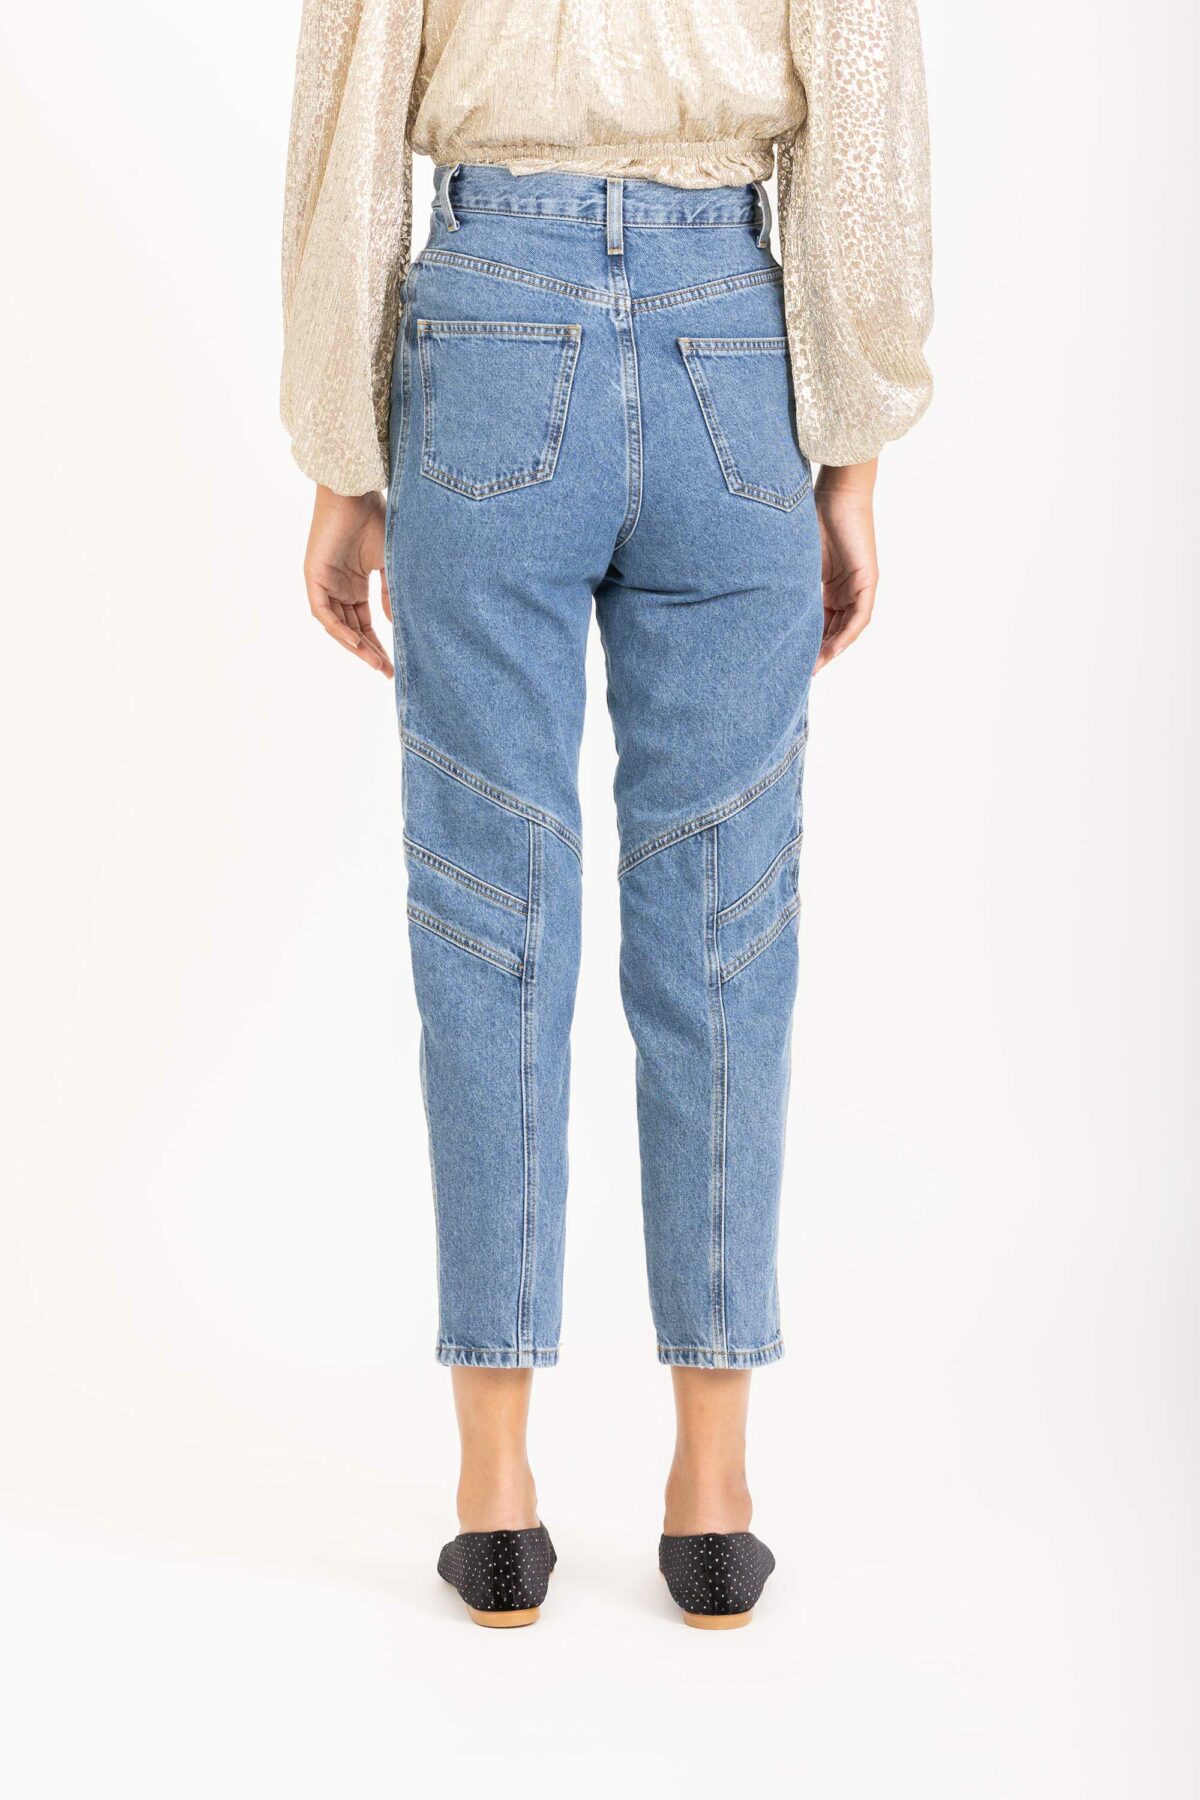 sanary-denim-jeans-iro-high-waisted-tapered-iro-matchboxathens